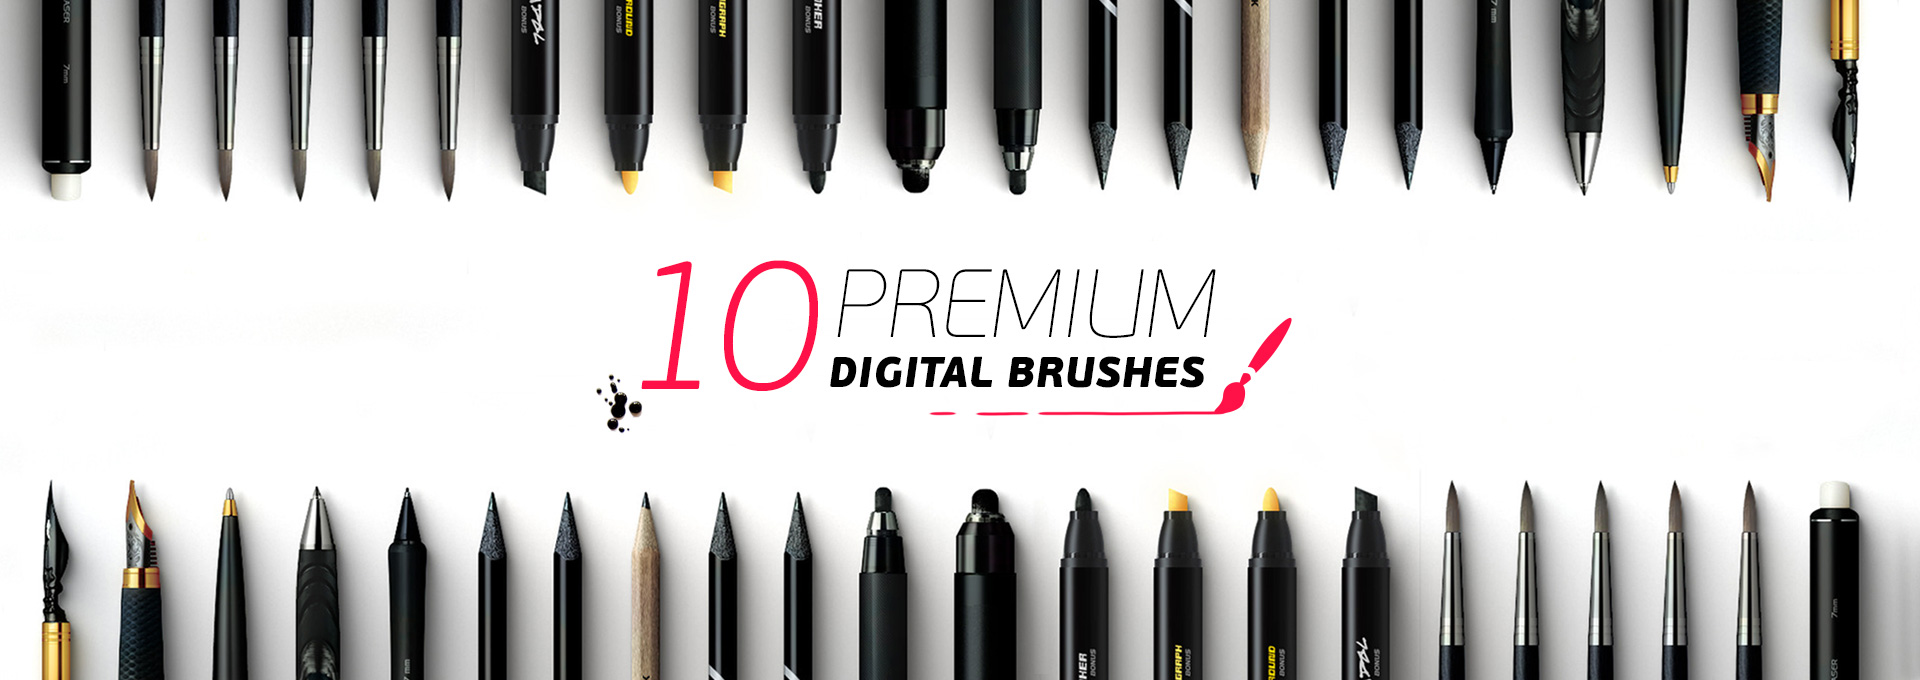 Best Premium Photoshop Brushes for Digital Painting